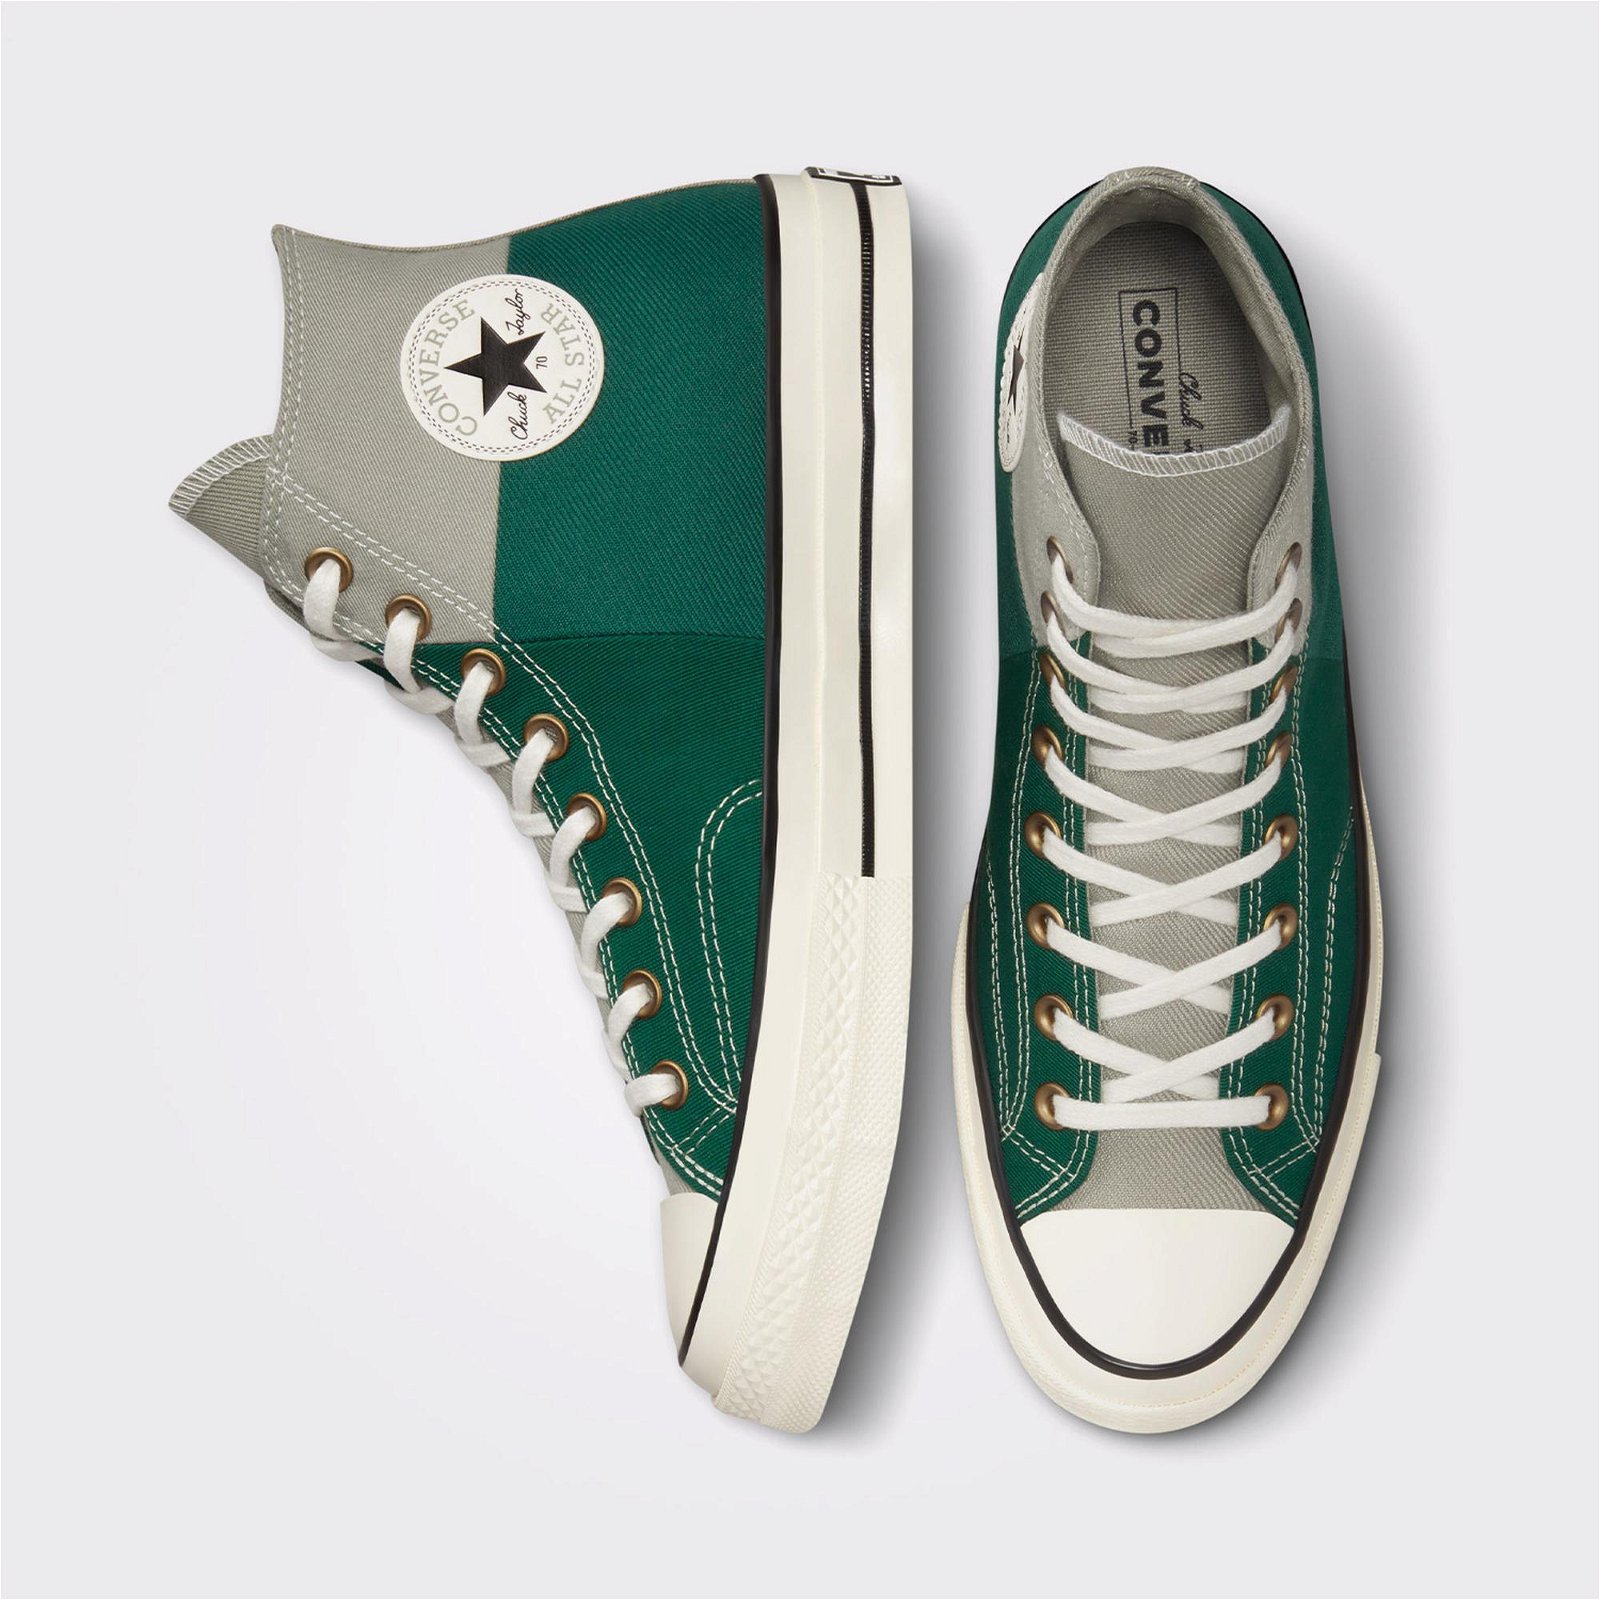 Converse High Chuck 70 Colorblocked Unisex Yeşil Sneaker